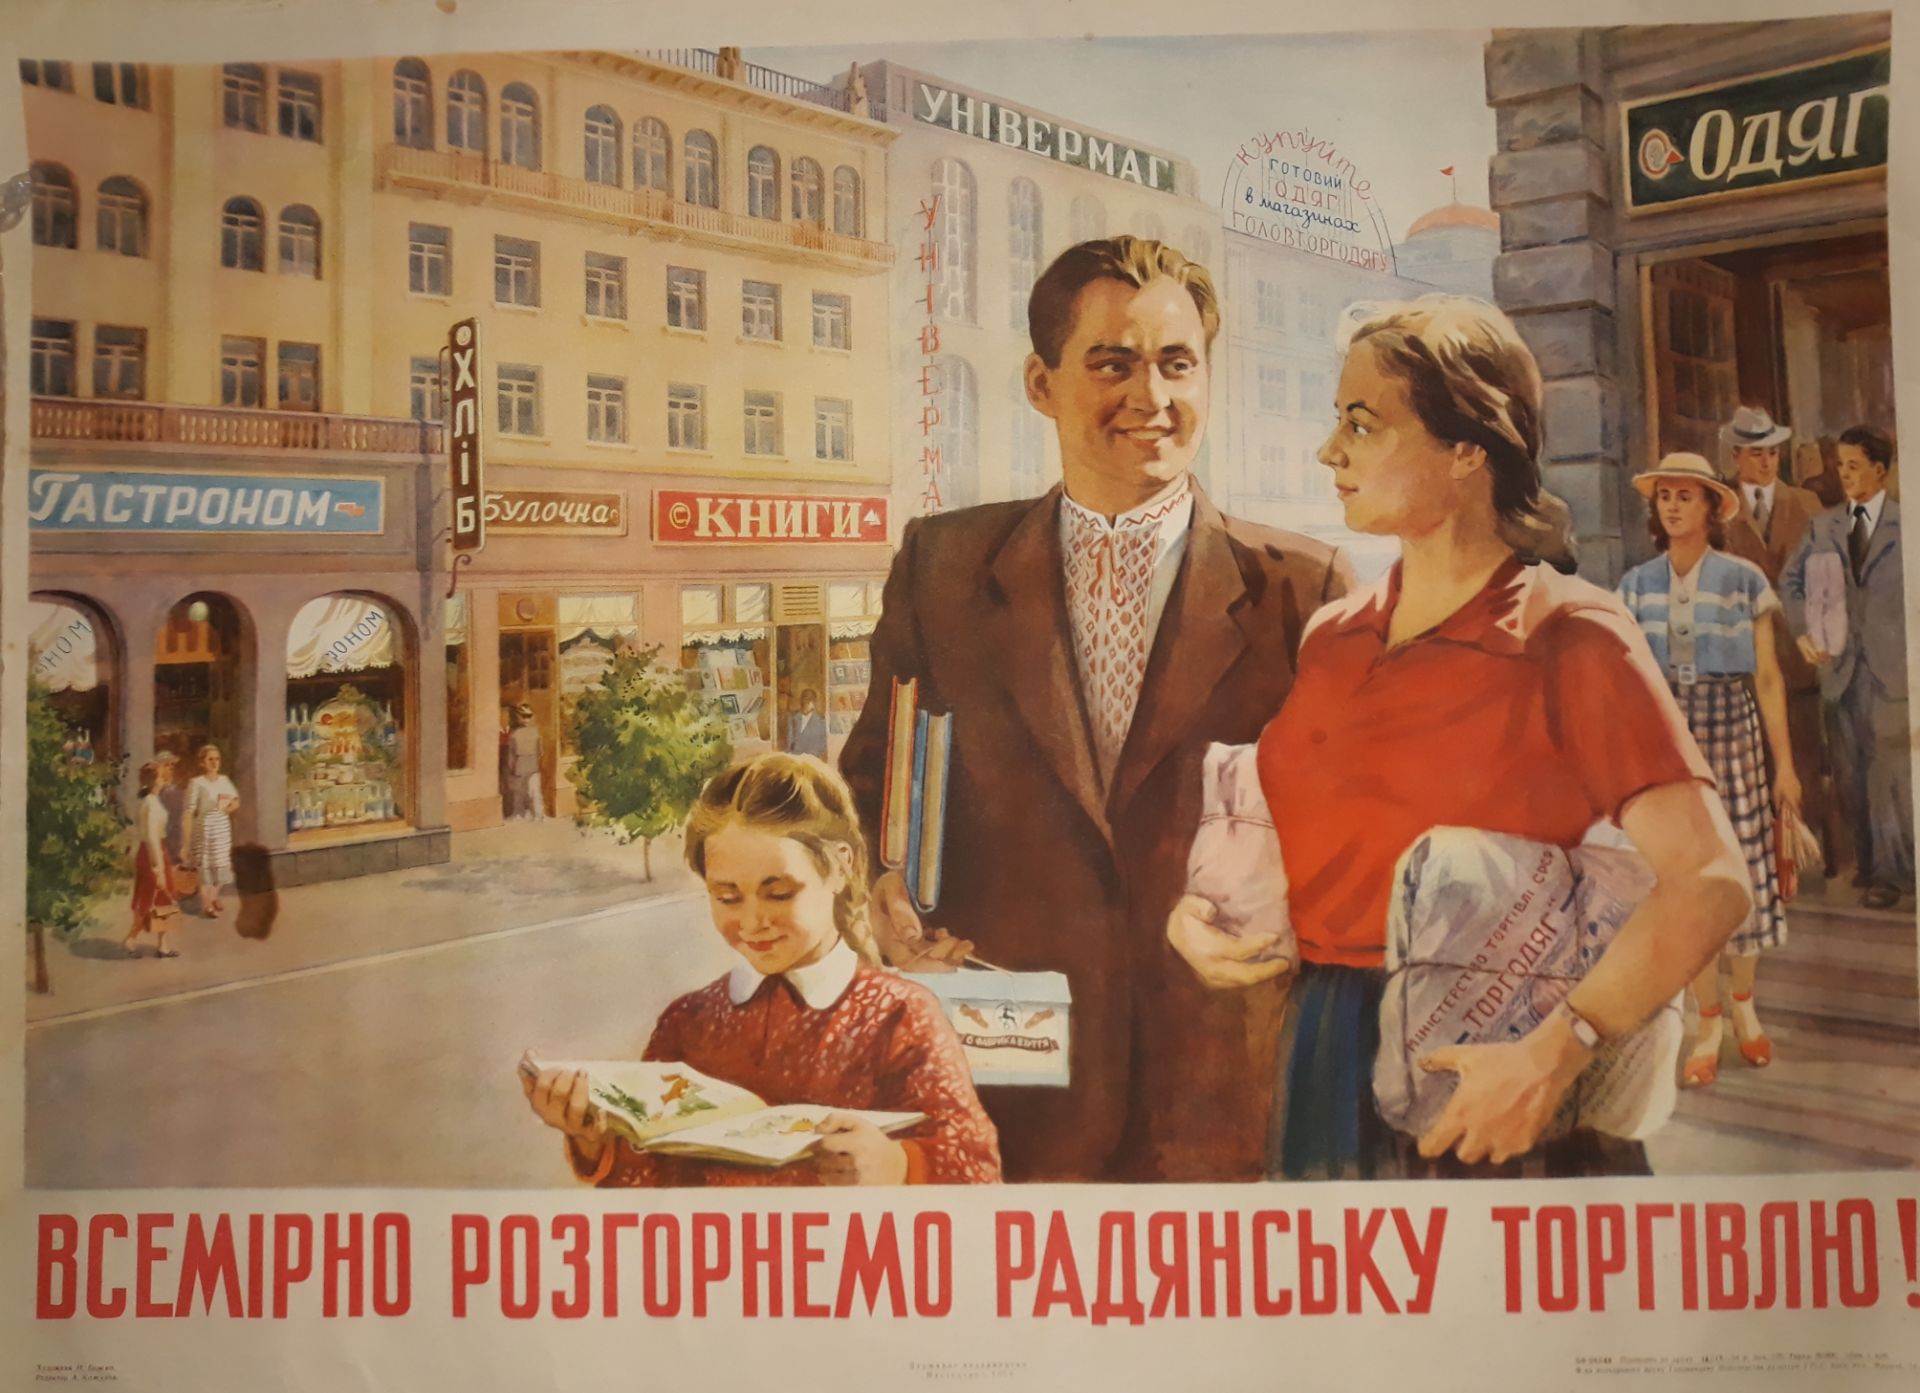 [Soviet]. Poster "Expand worldwide soviet trade". Nina Bozhko. 1954.